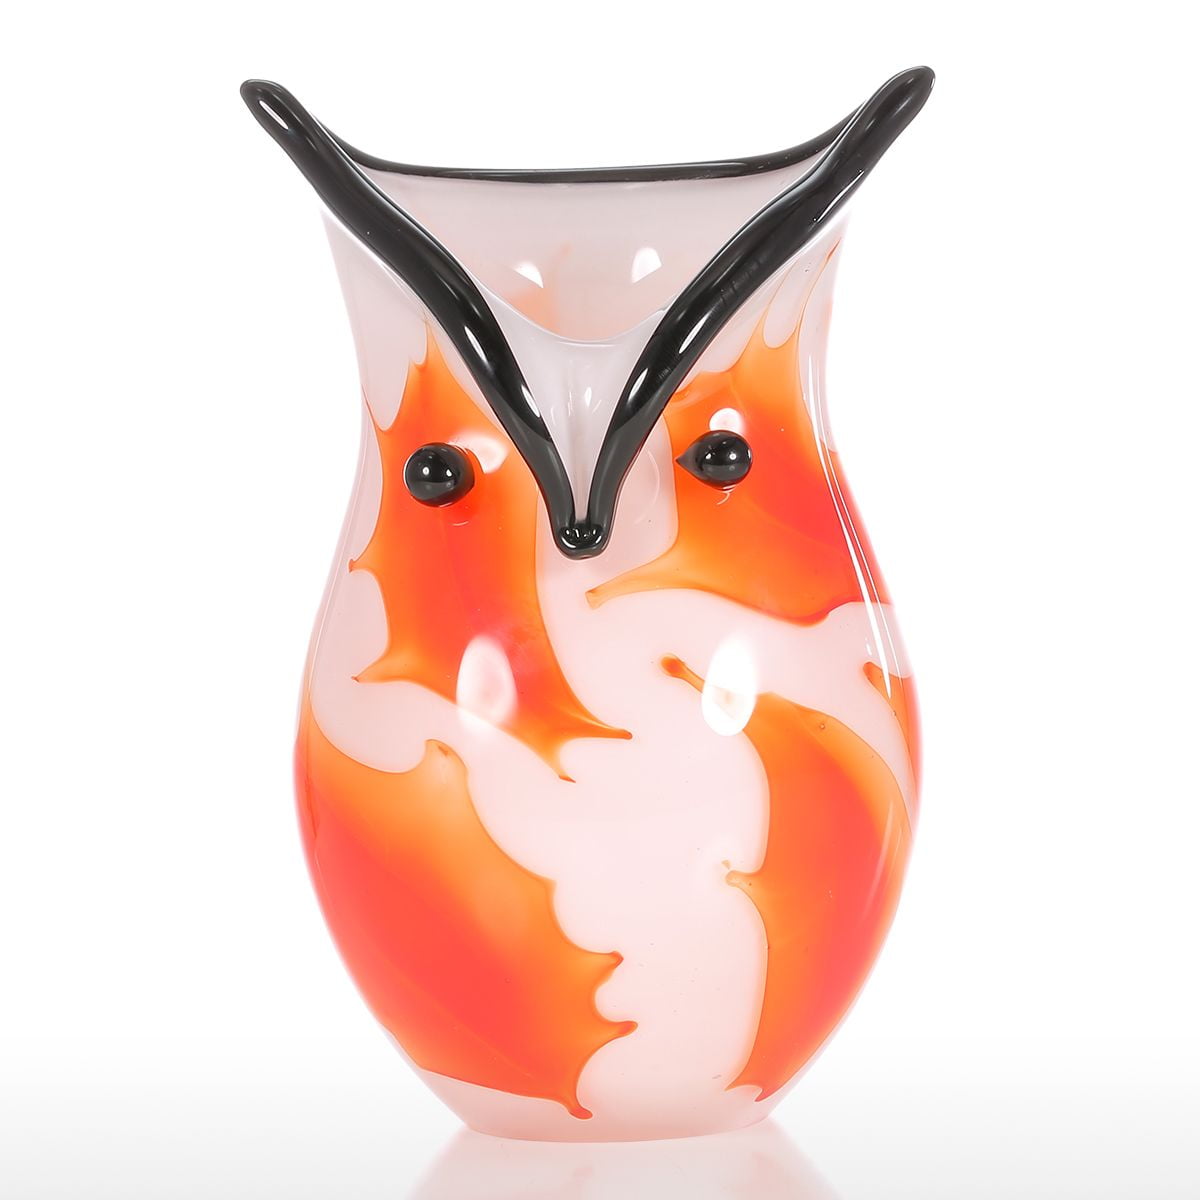 Tooarts Colorful Whale Gift Glass Ornament Animal Figurine Handblown Home U7B5 